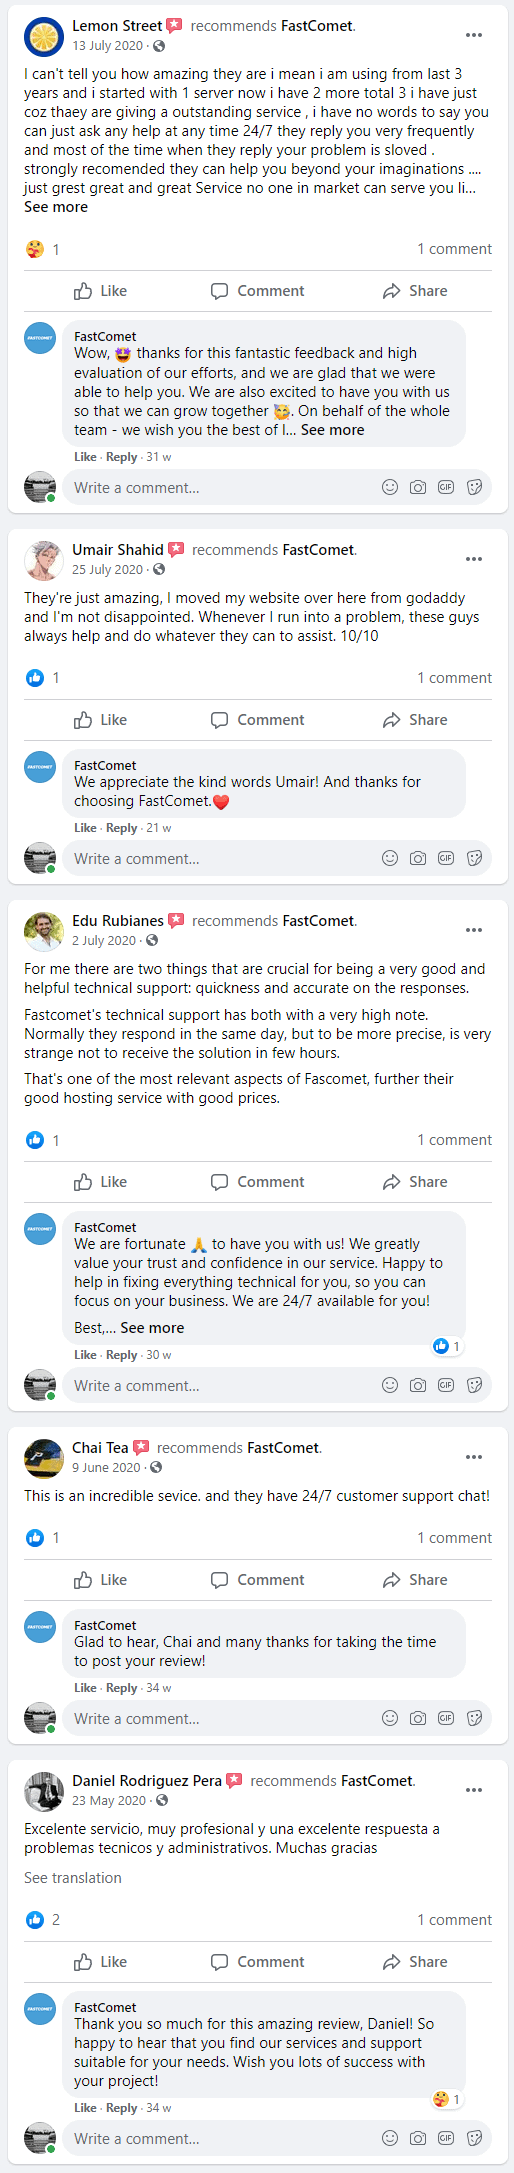 FastComet-Facebook-review